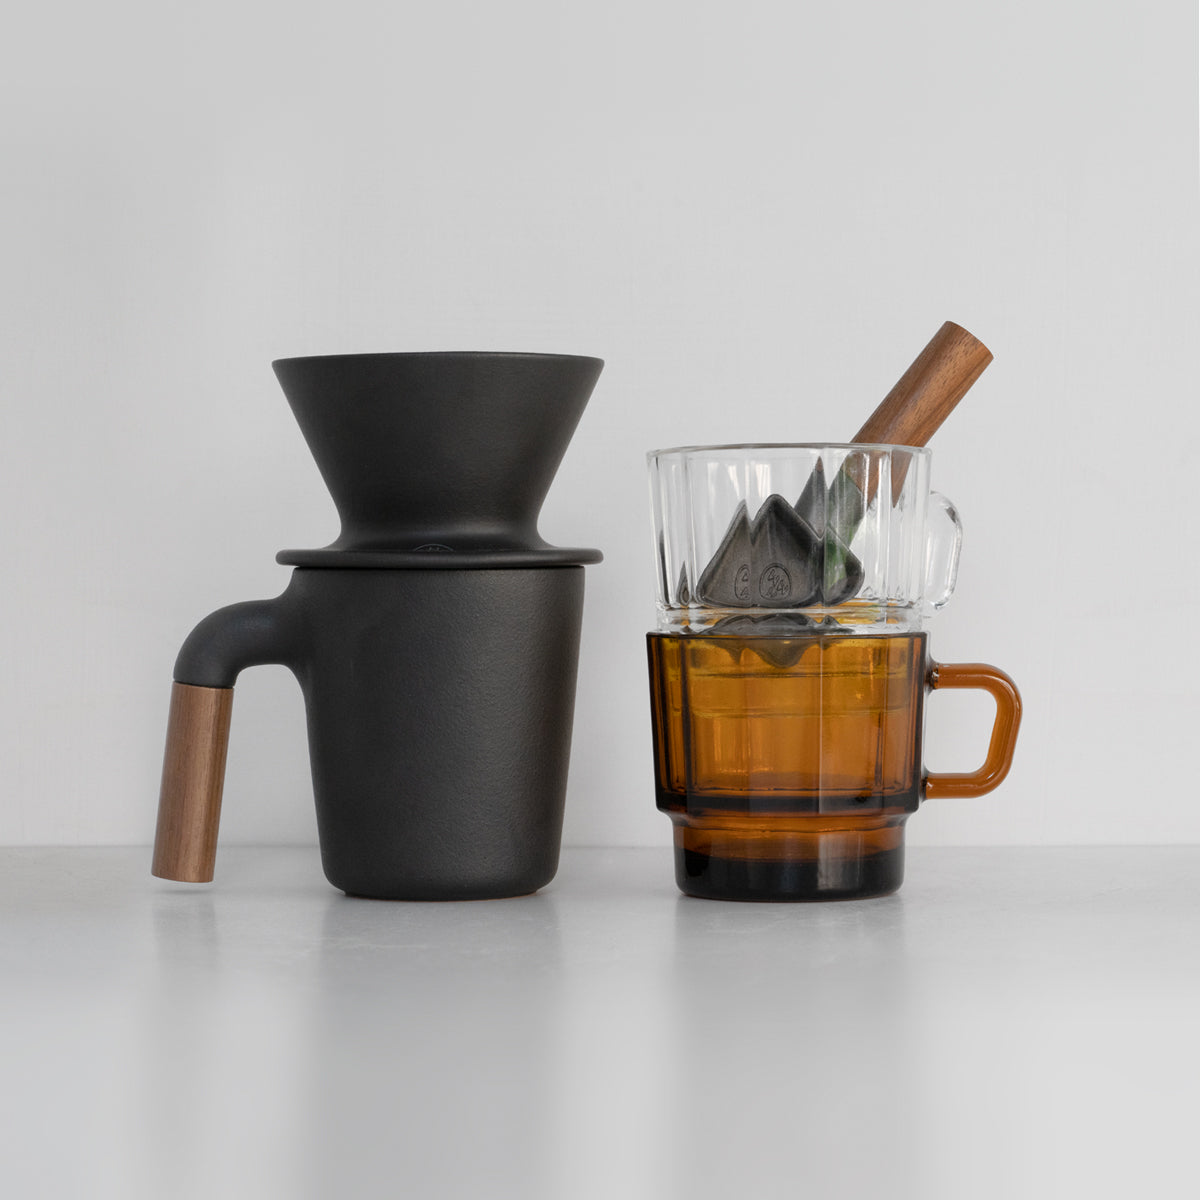 HMM coffee collection. Unique ceramic with walnut wood mug.